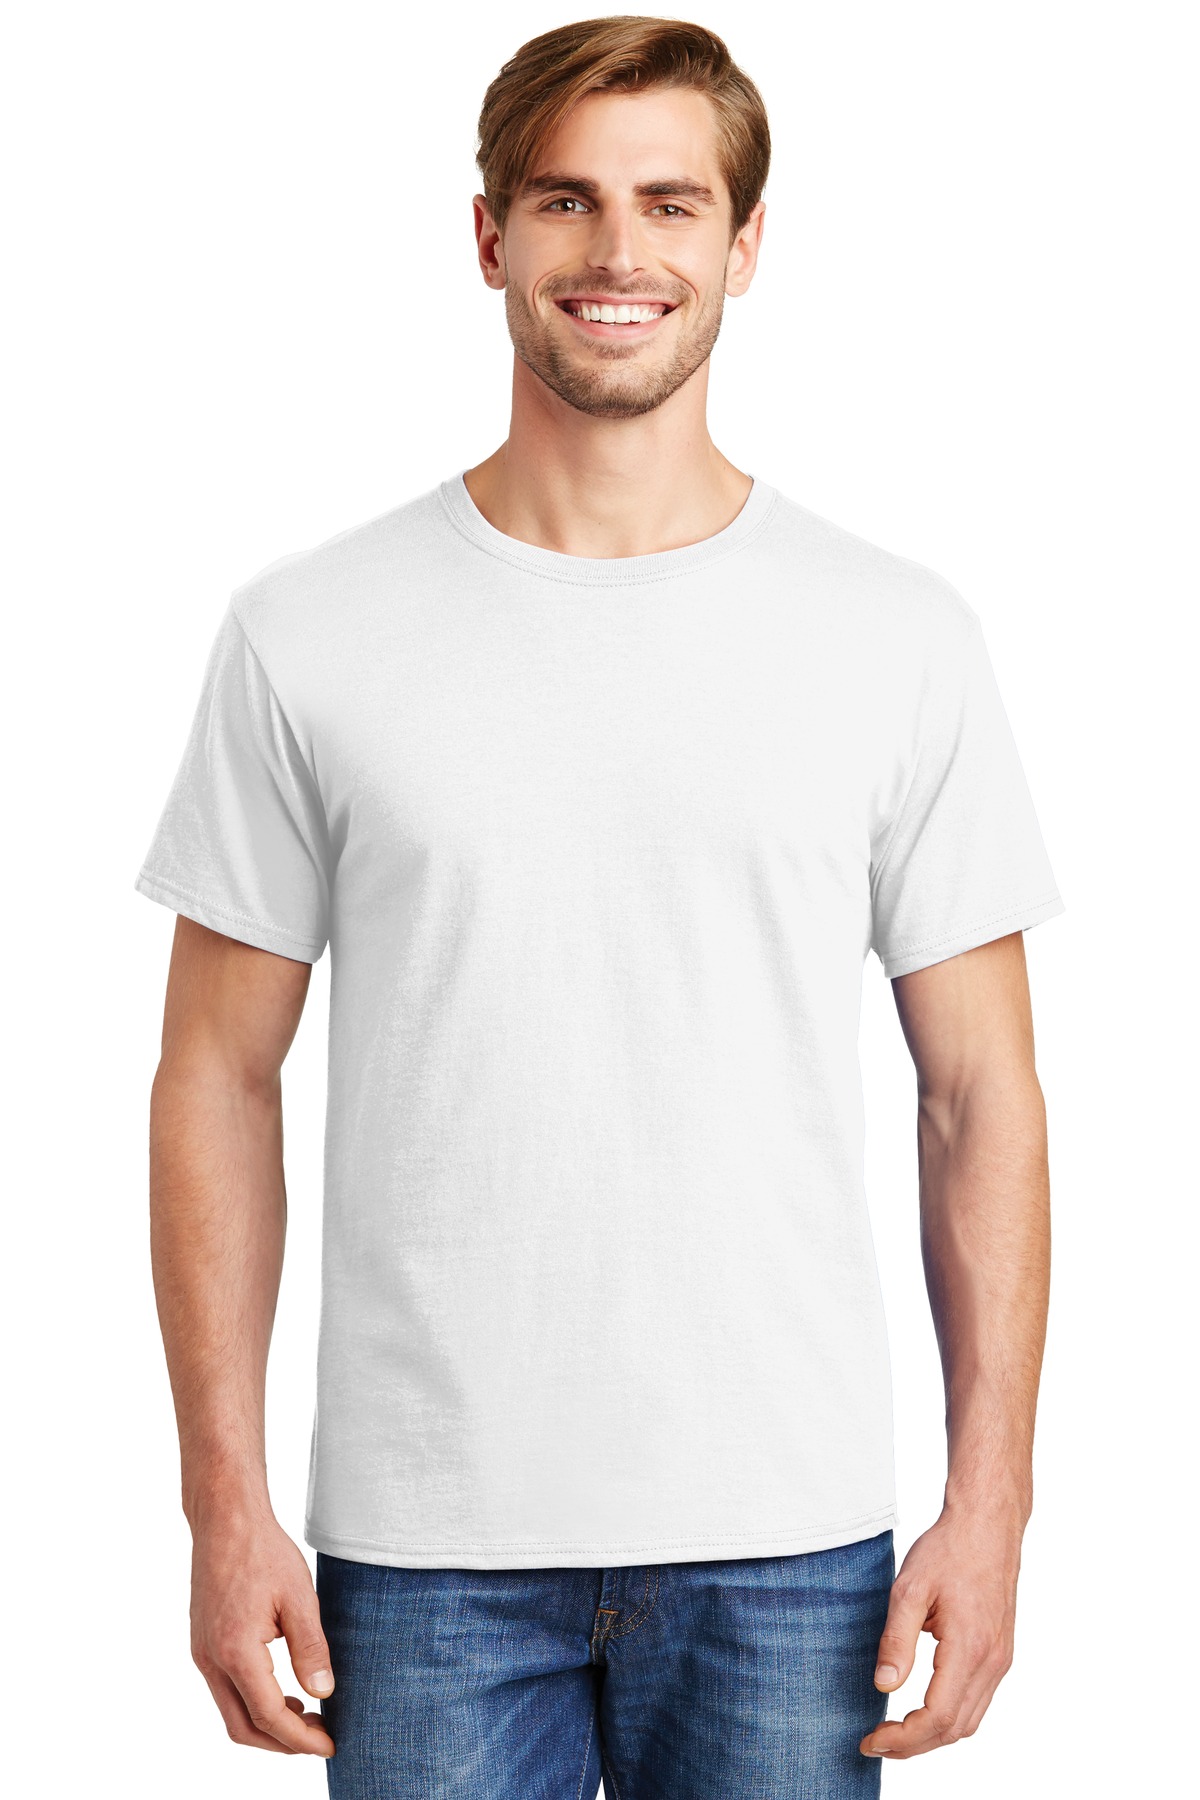 Hanes - Essential-T 100% Cotton T-Shirt-Hanes